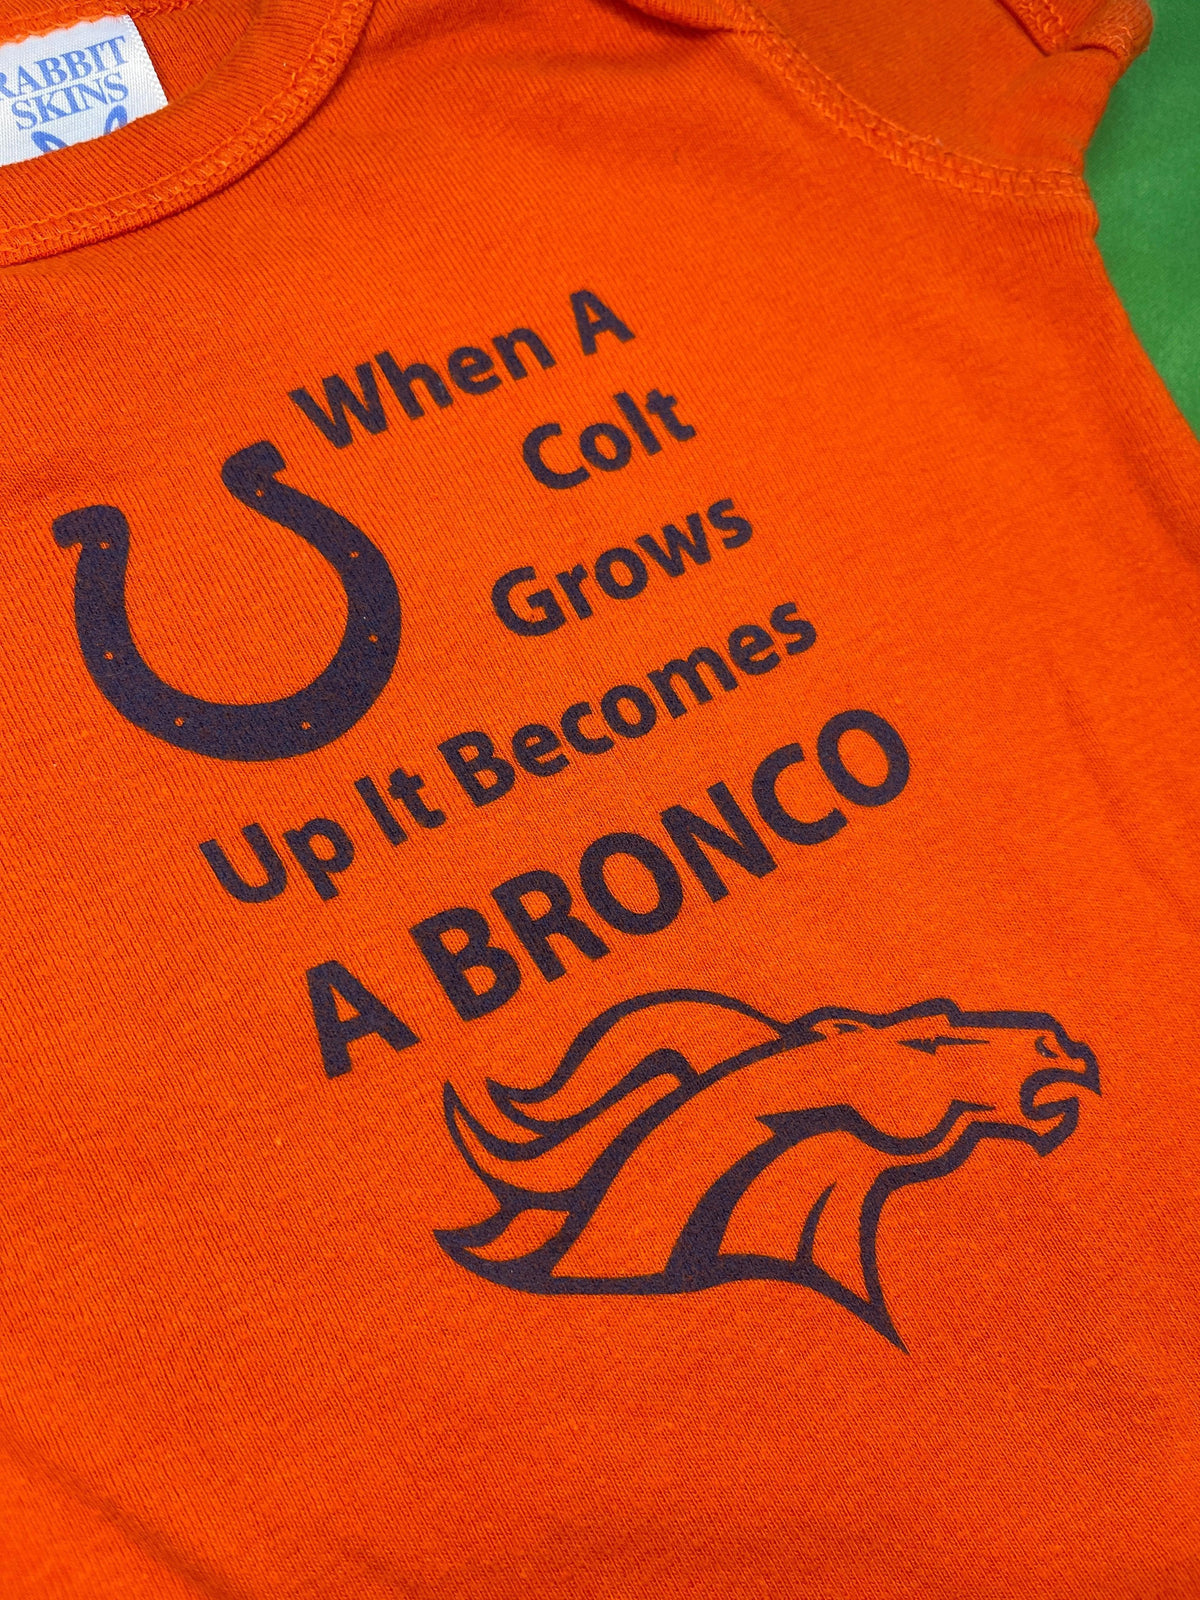 NFL Denver Broncos "When a Colt Grows Up" Bodysuit 6 months